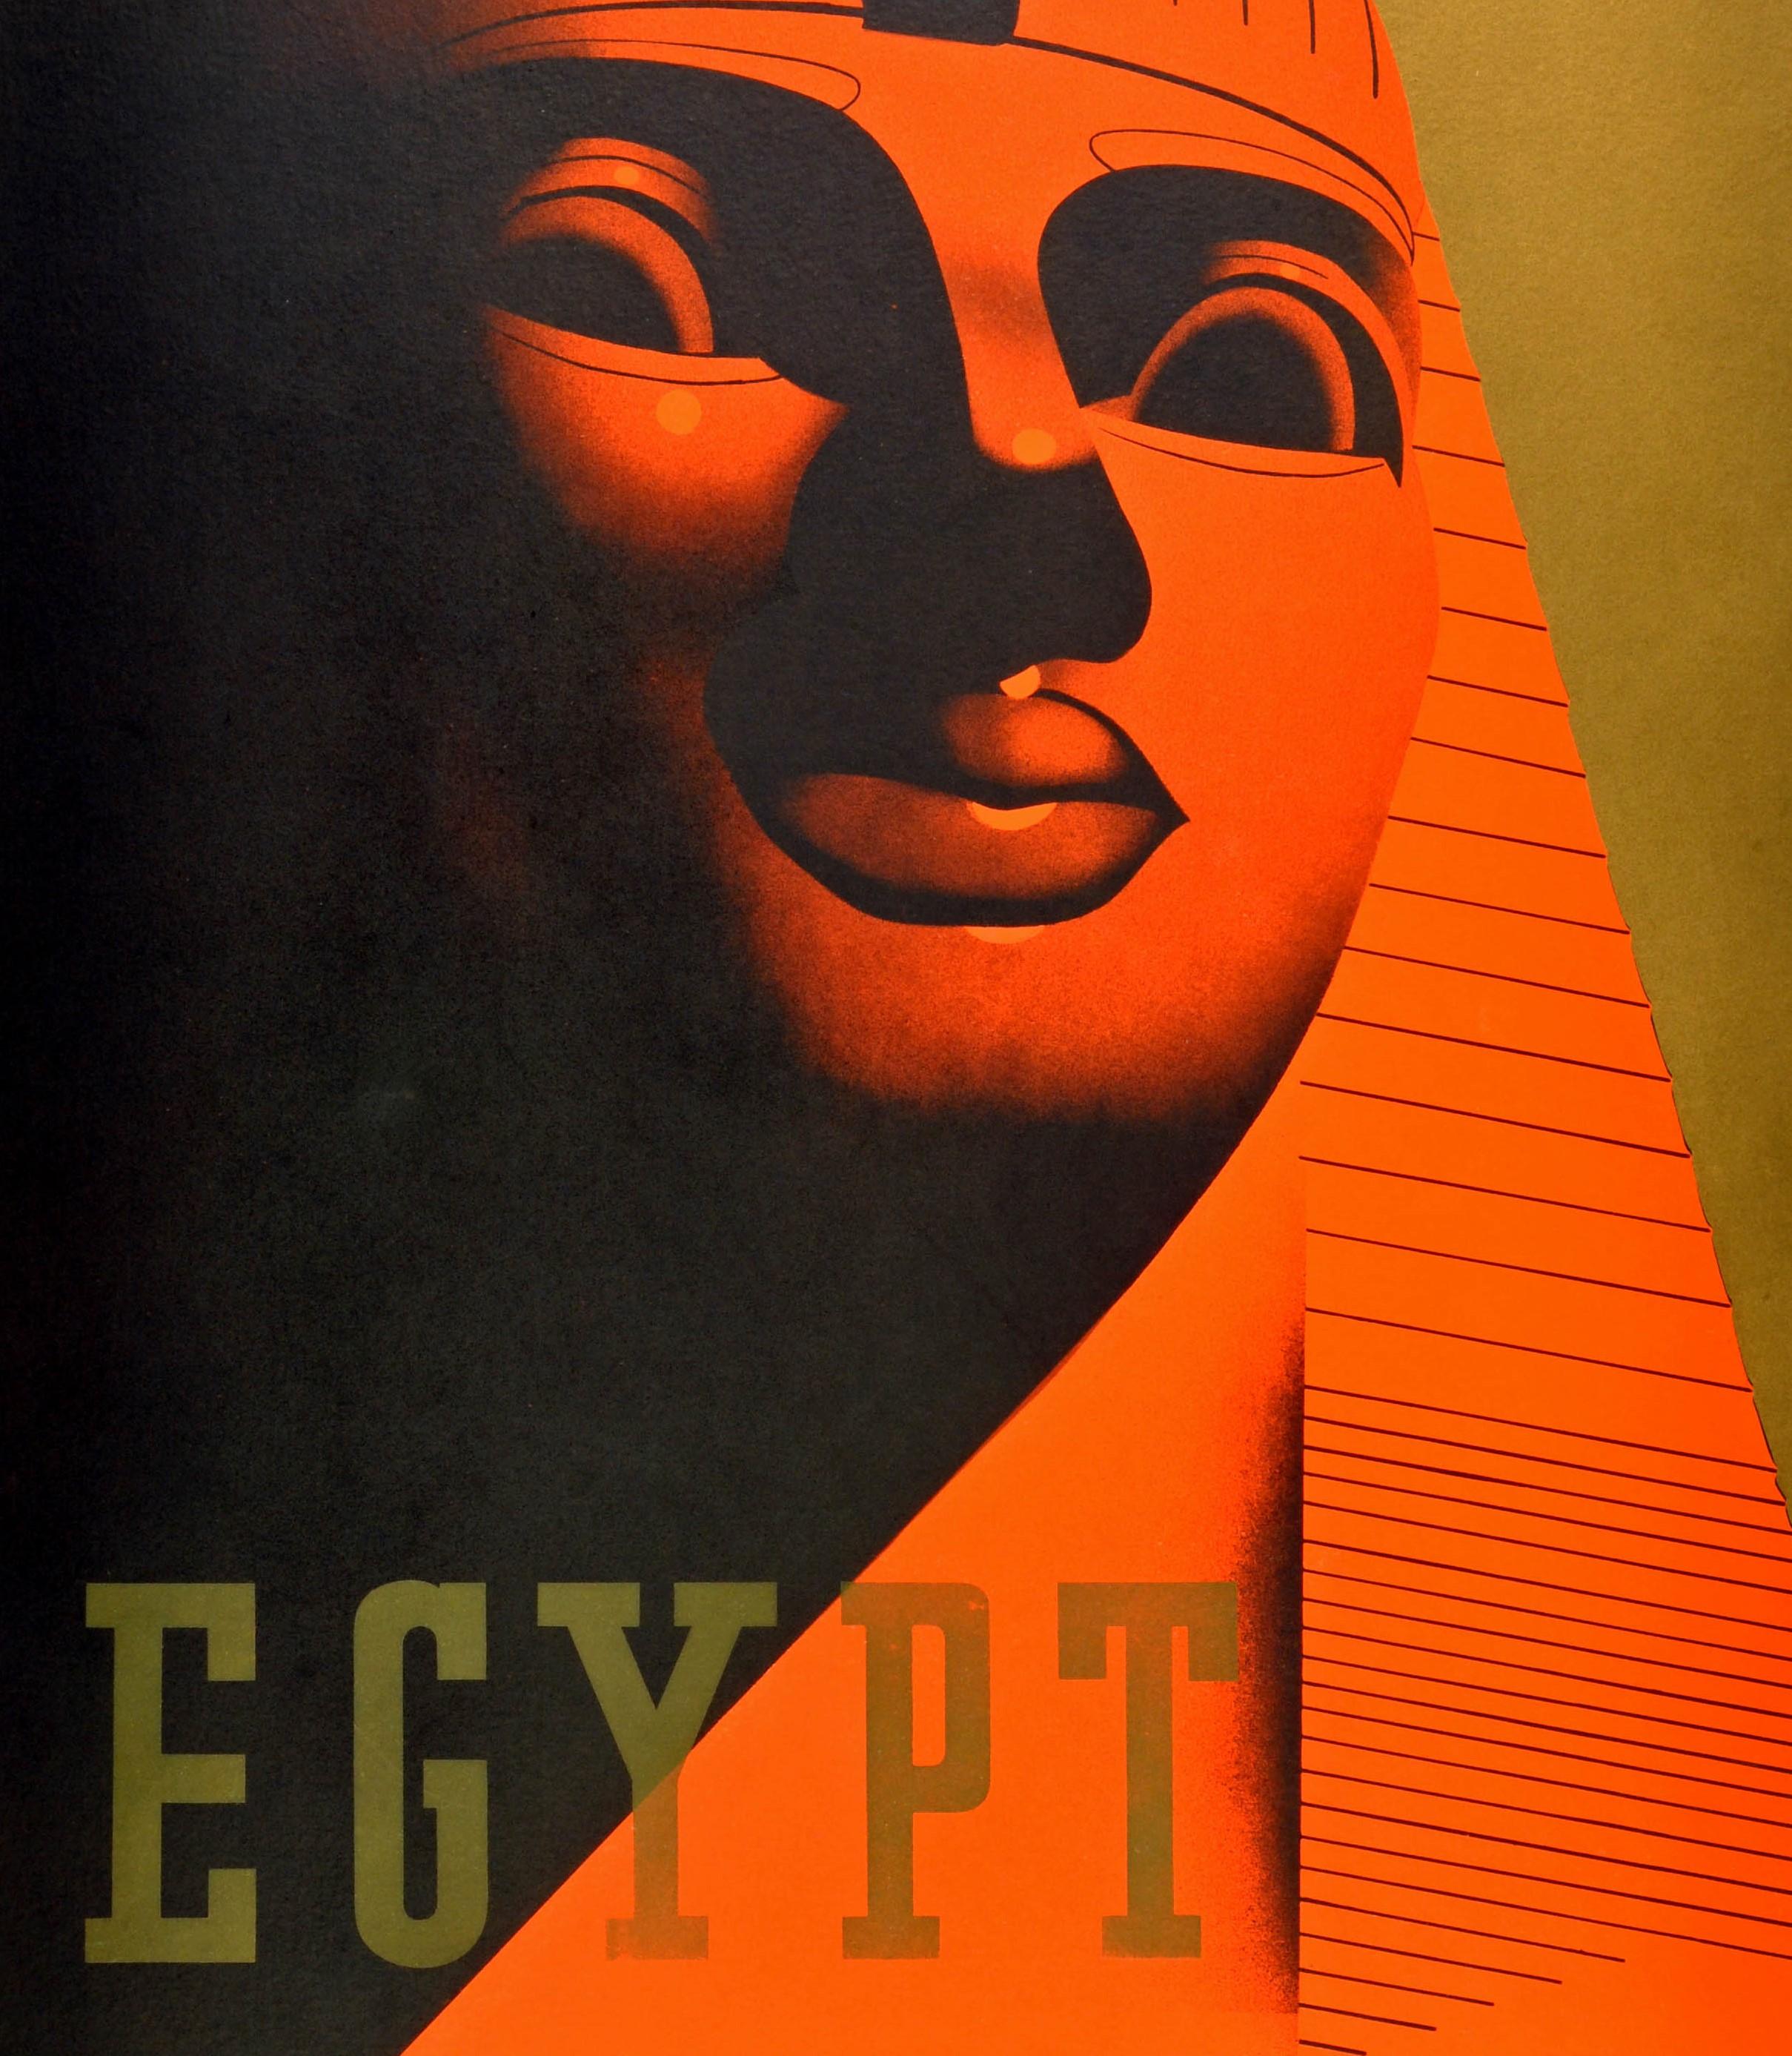 egypt vintage travel poster